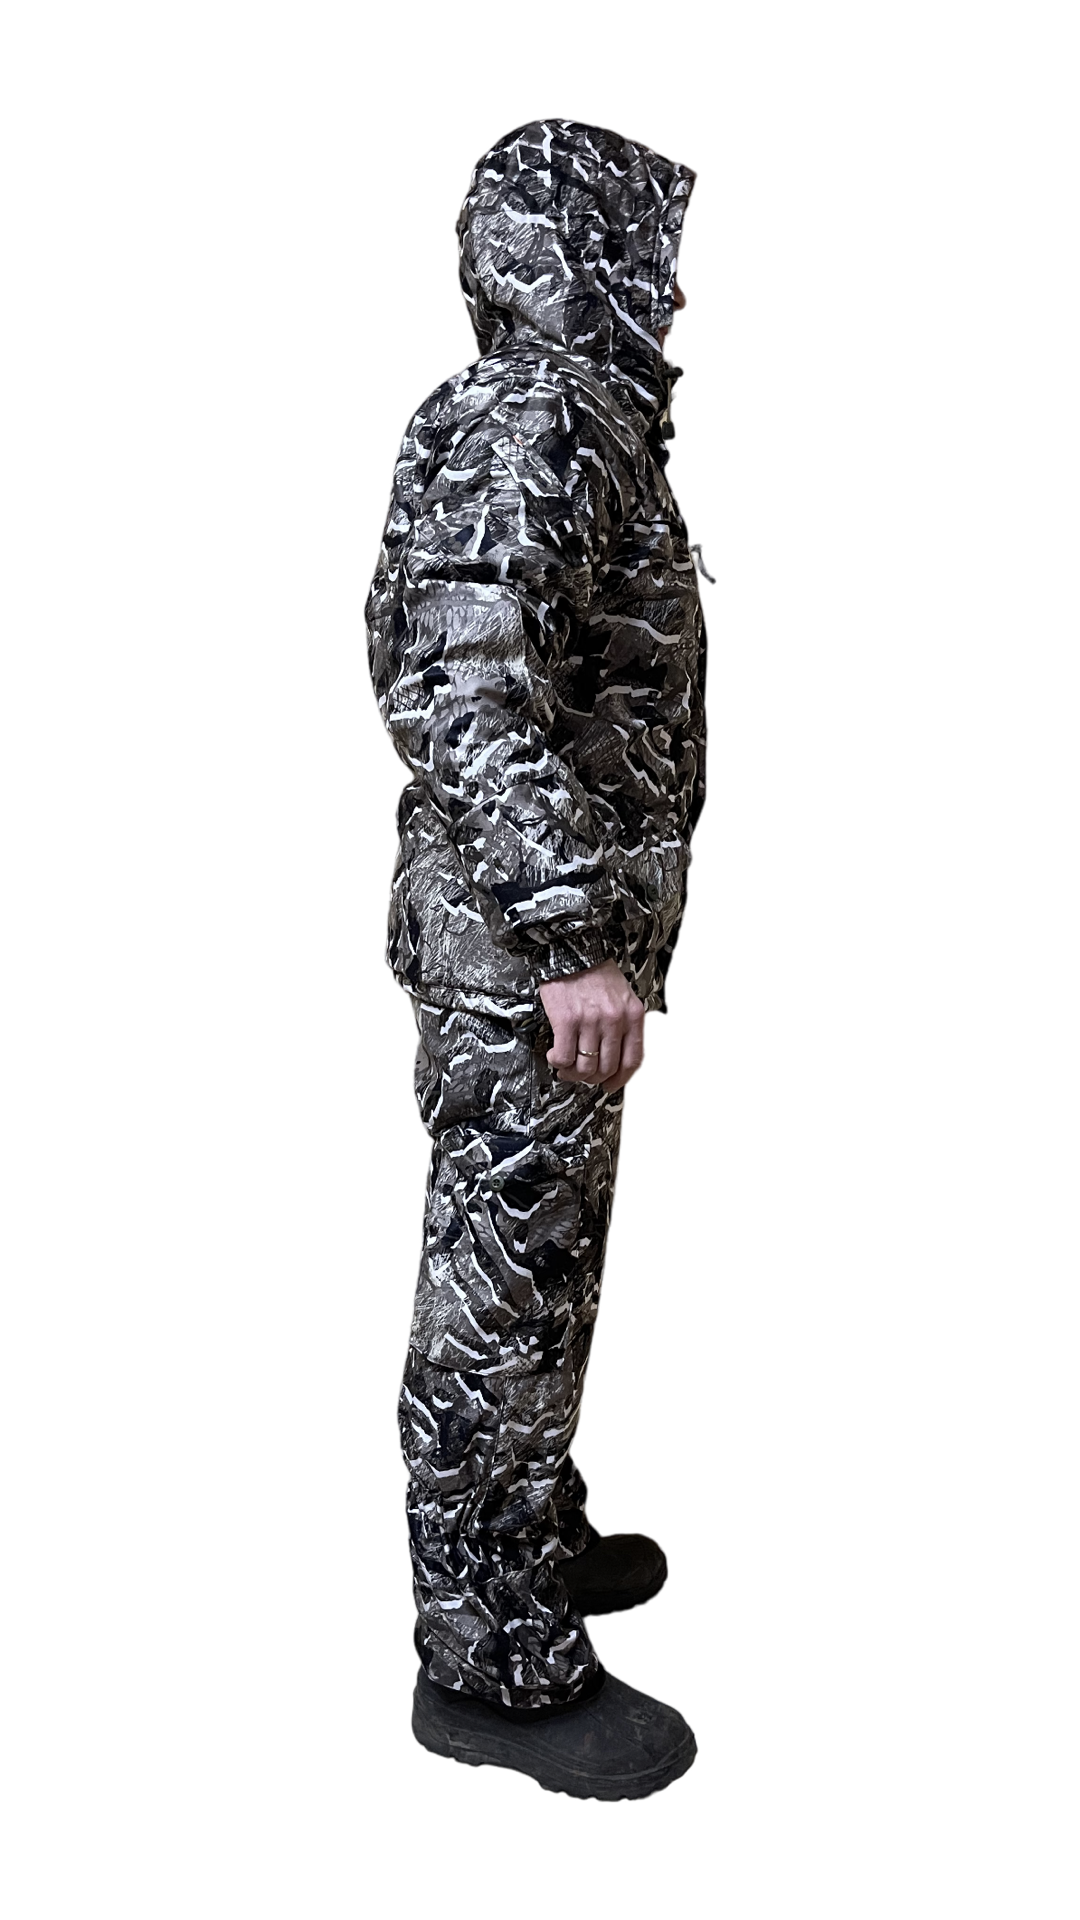 Зимний костюм "DN" (дигул) оптом и в розницу